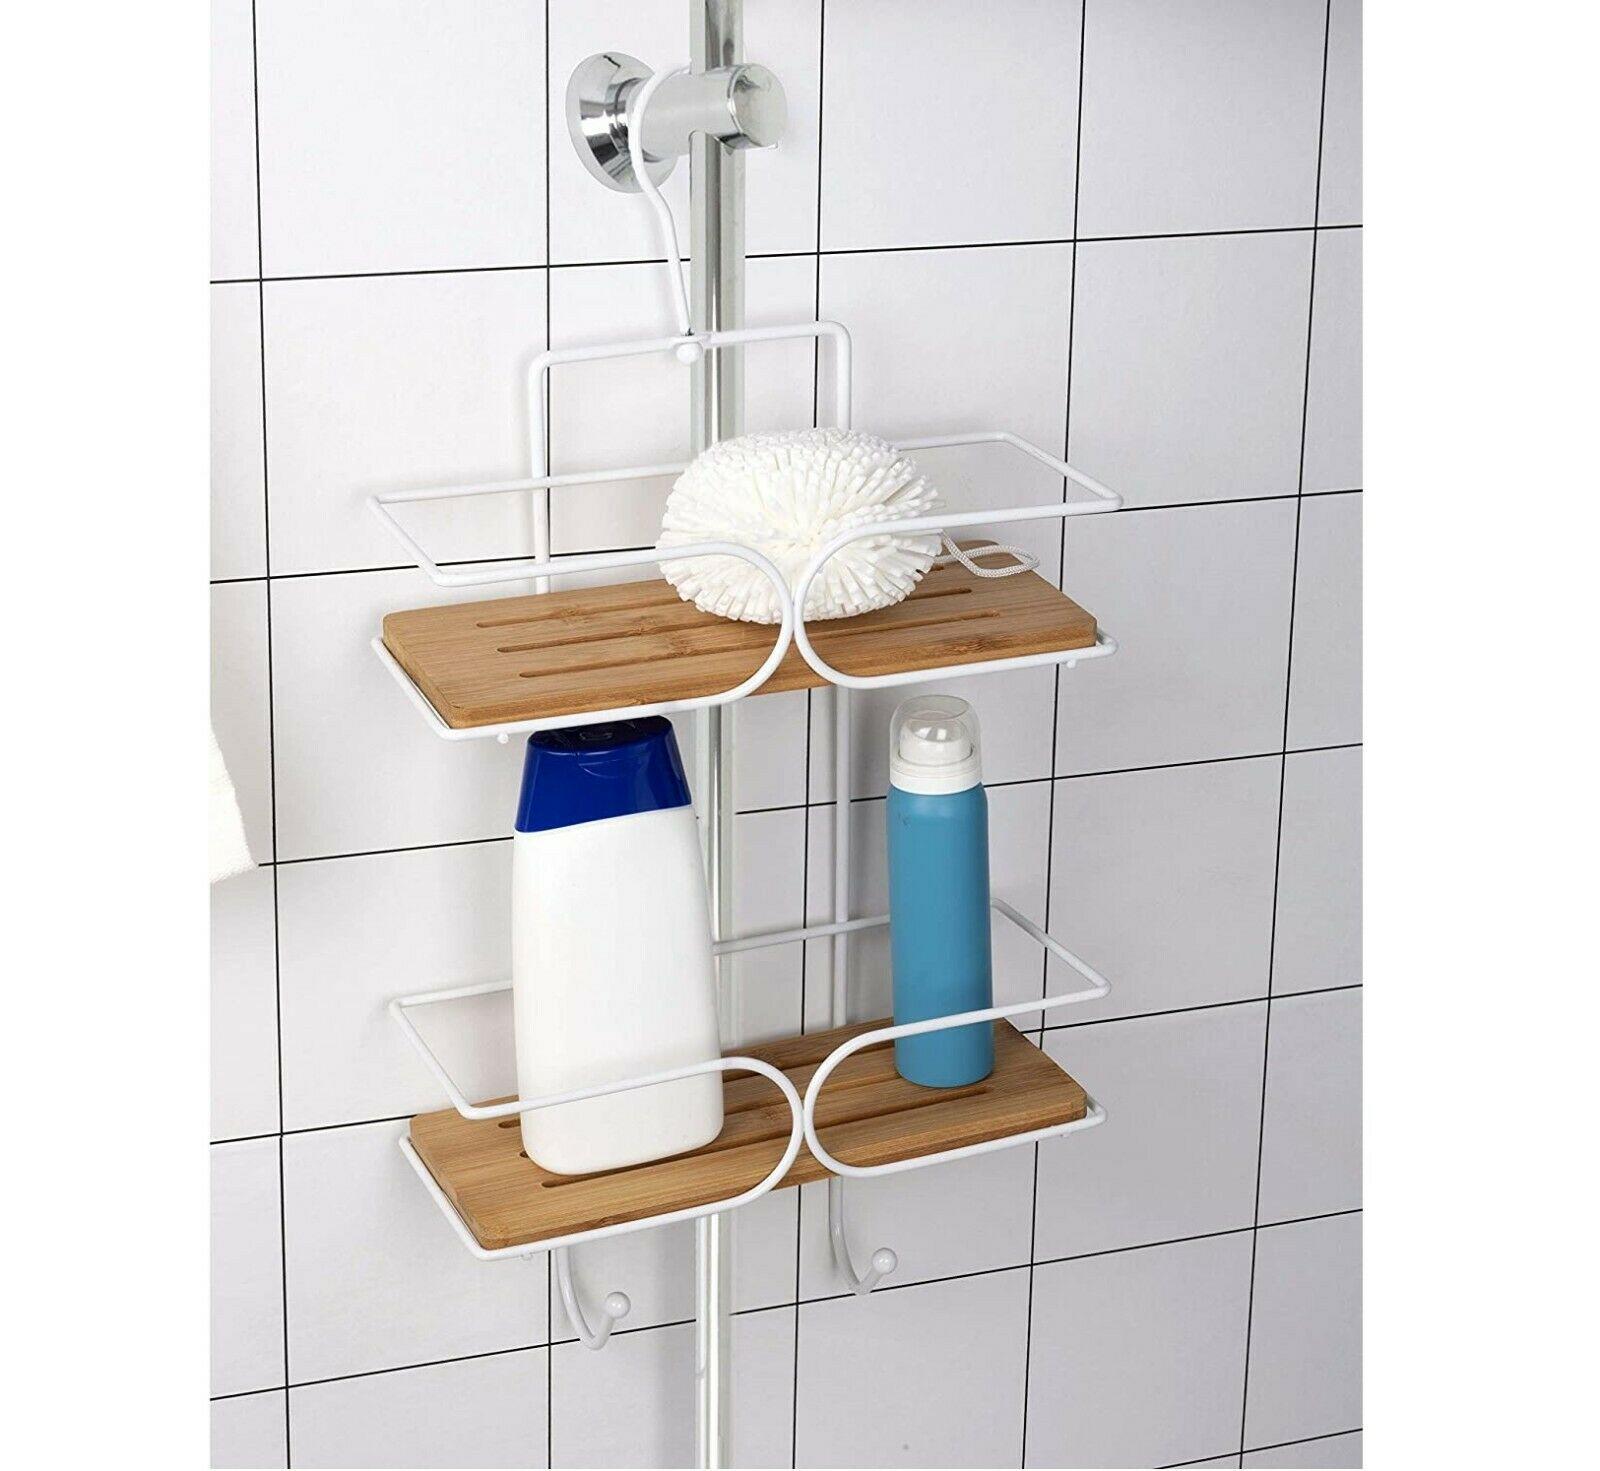 Details about   Hanging Shower Caddy Wire Rack Holder Organizer Hooks Bathroom EXTRA WIDE 